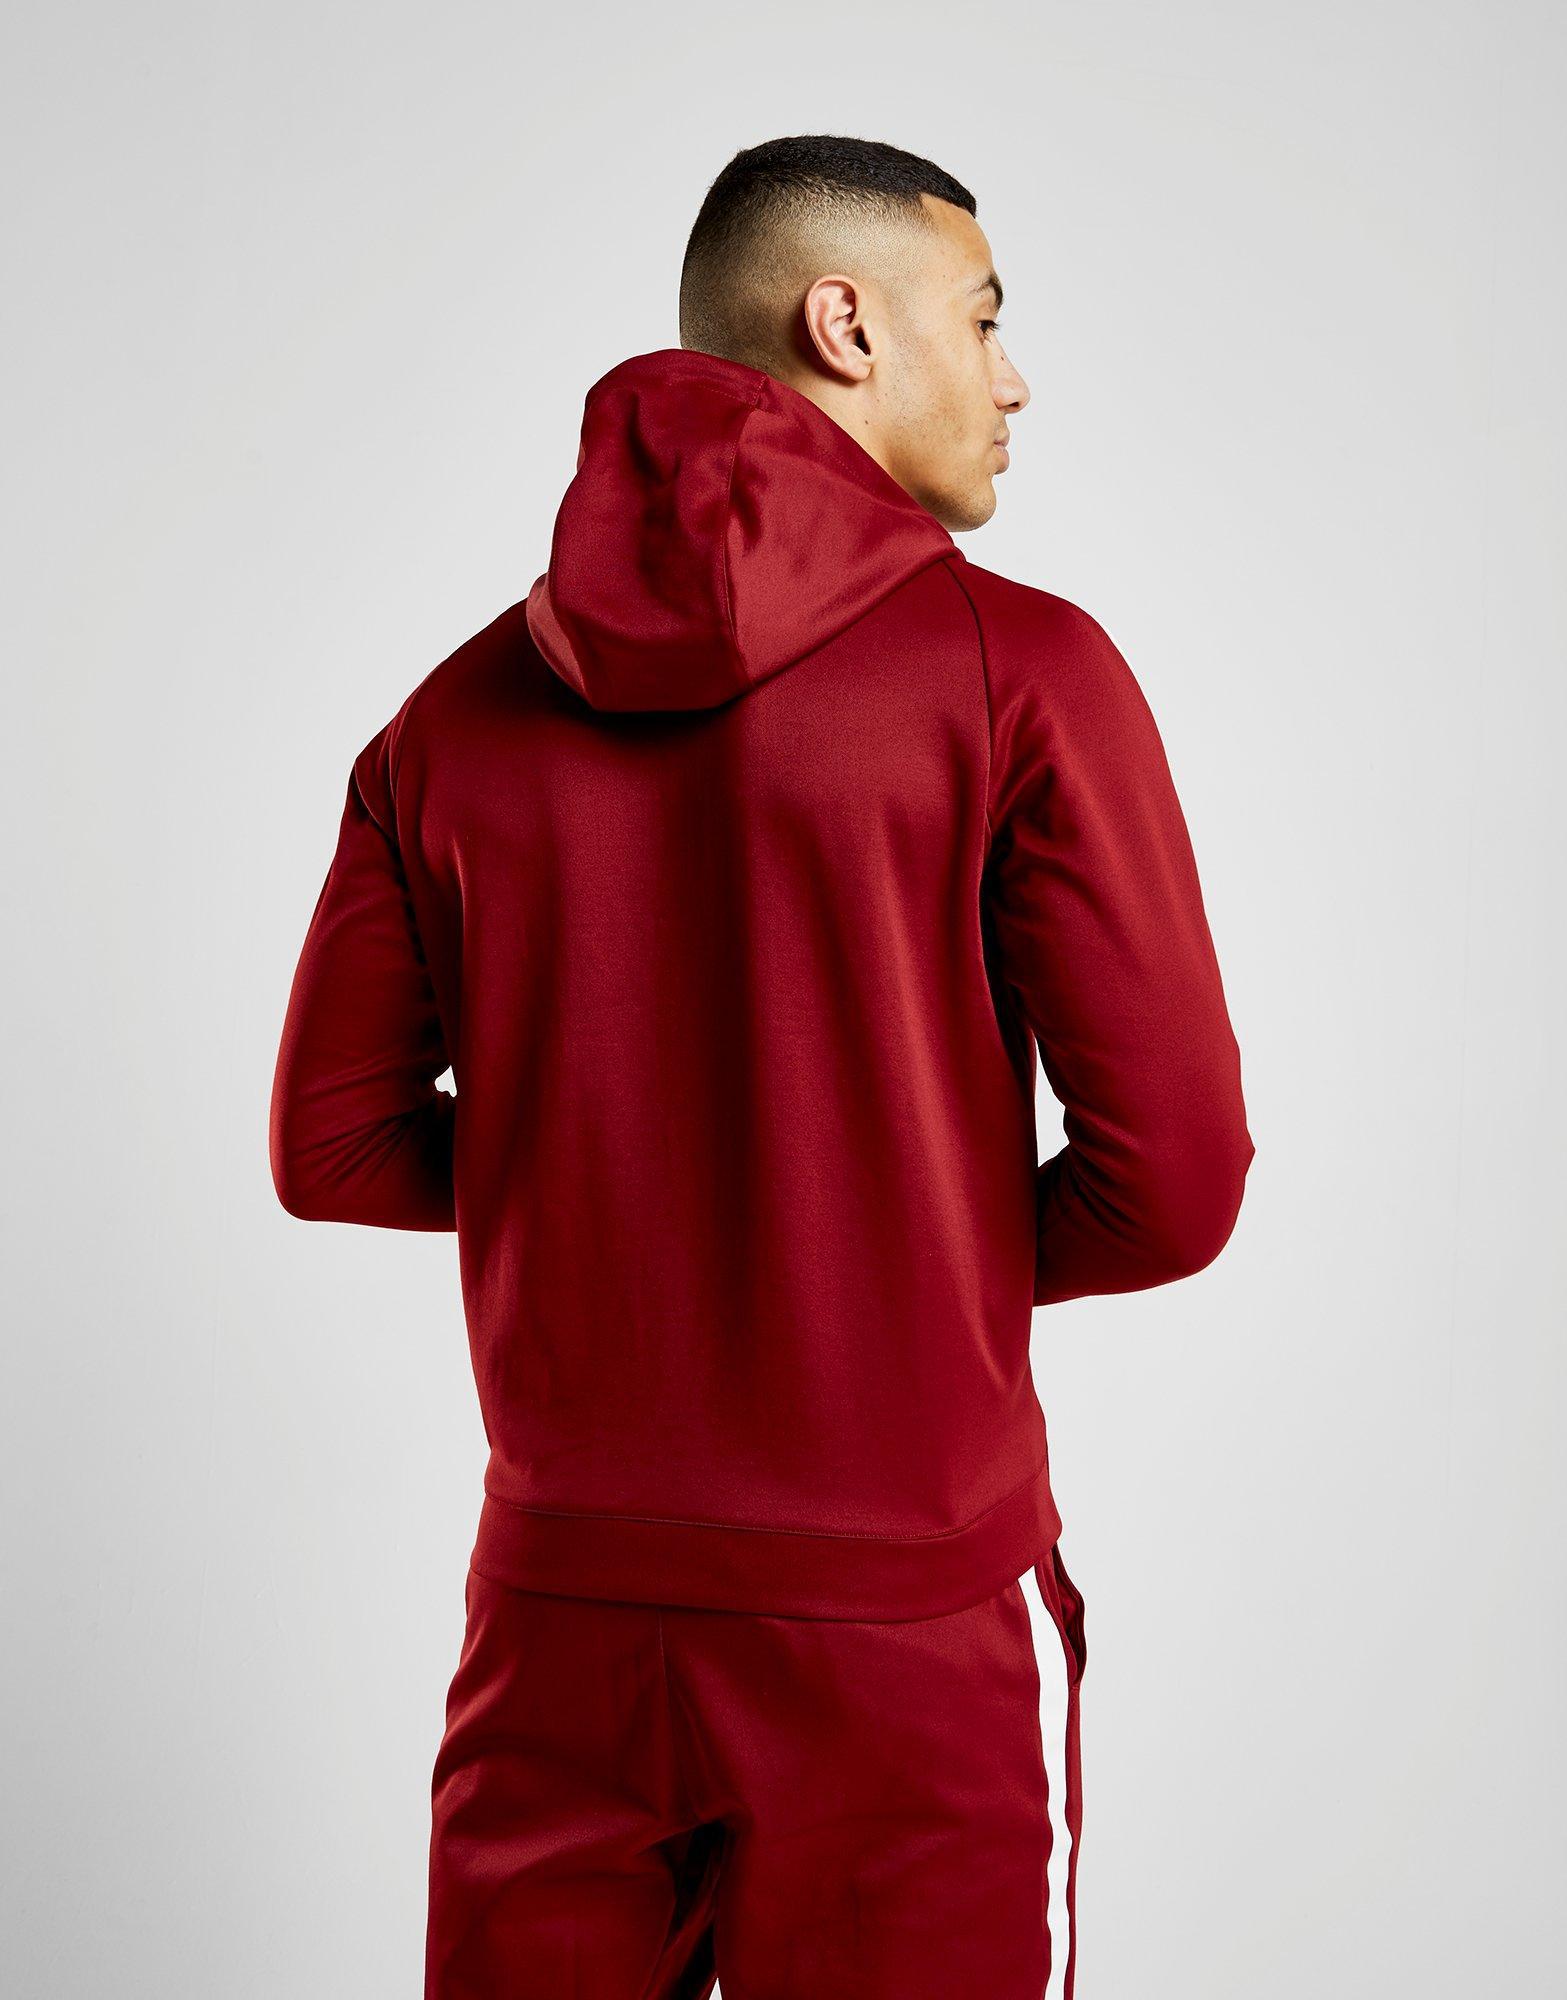 Nike Synthetic Tribute Full Zip Hoodie in Red for Men - Lyst